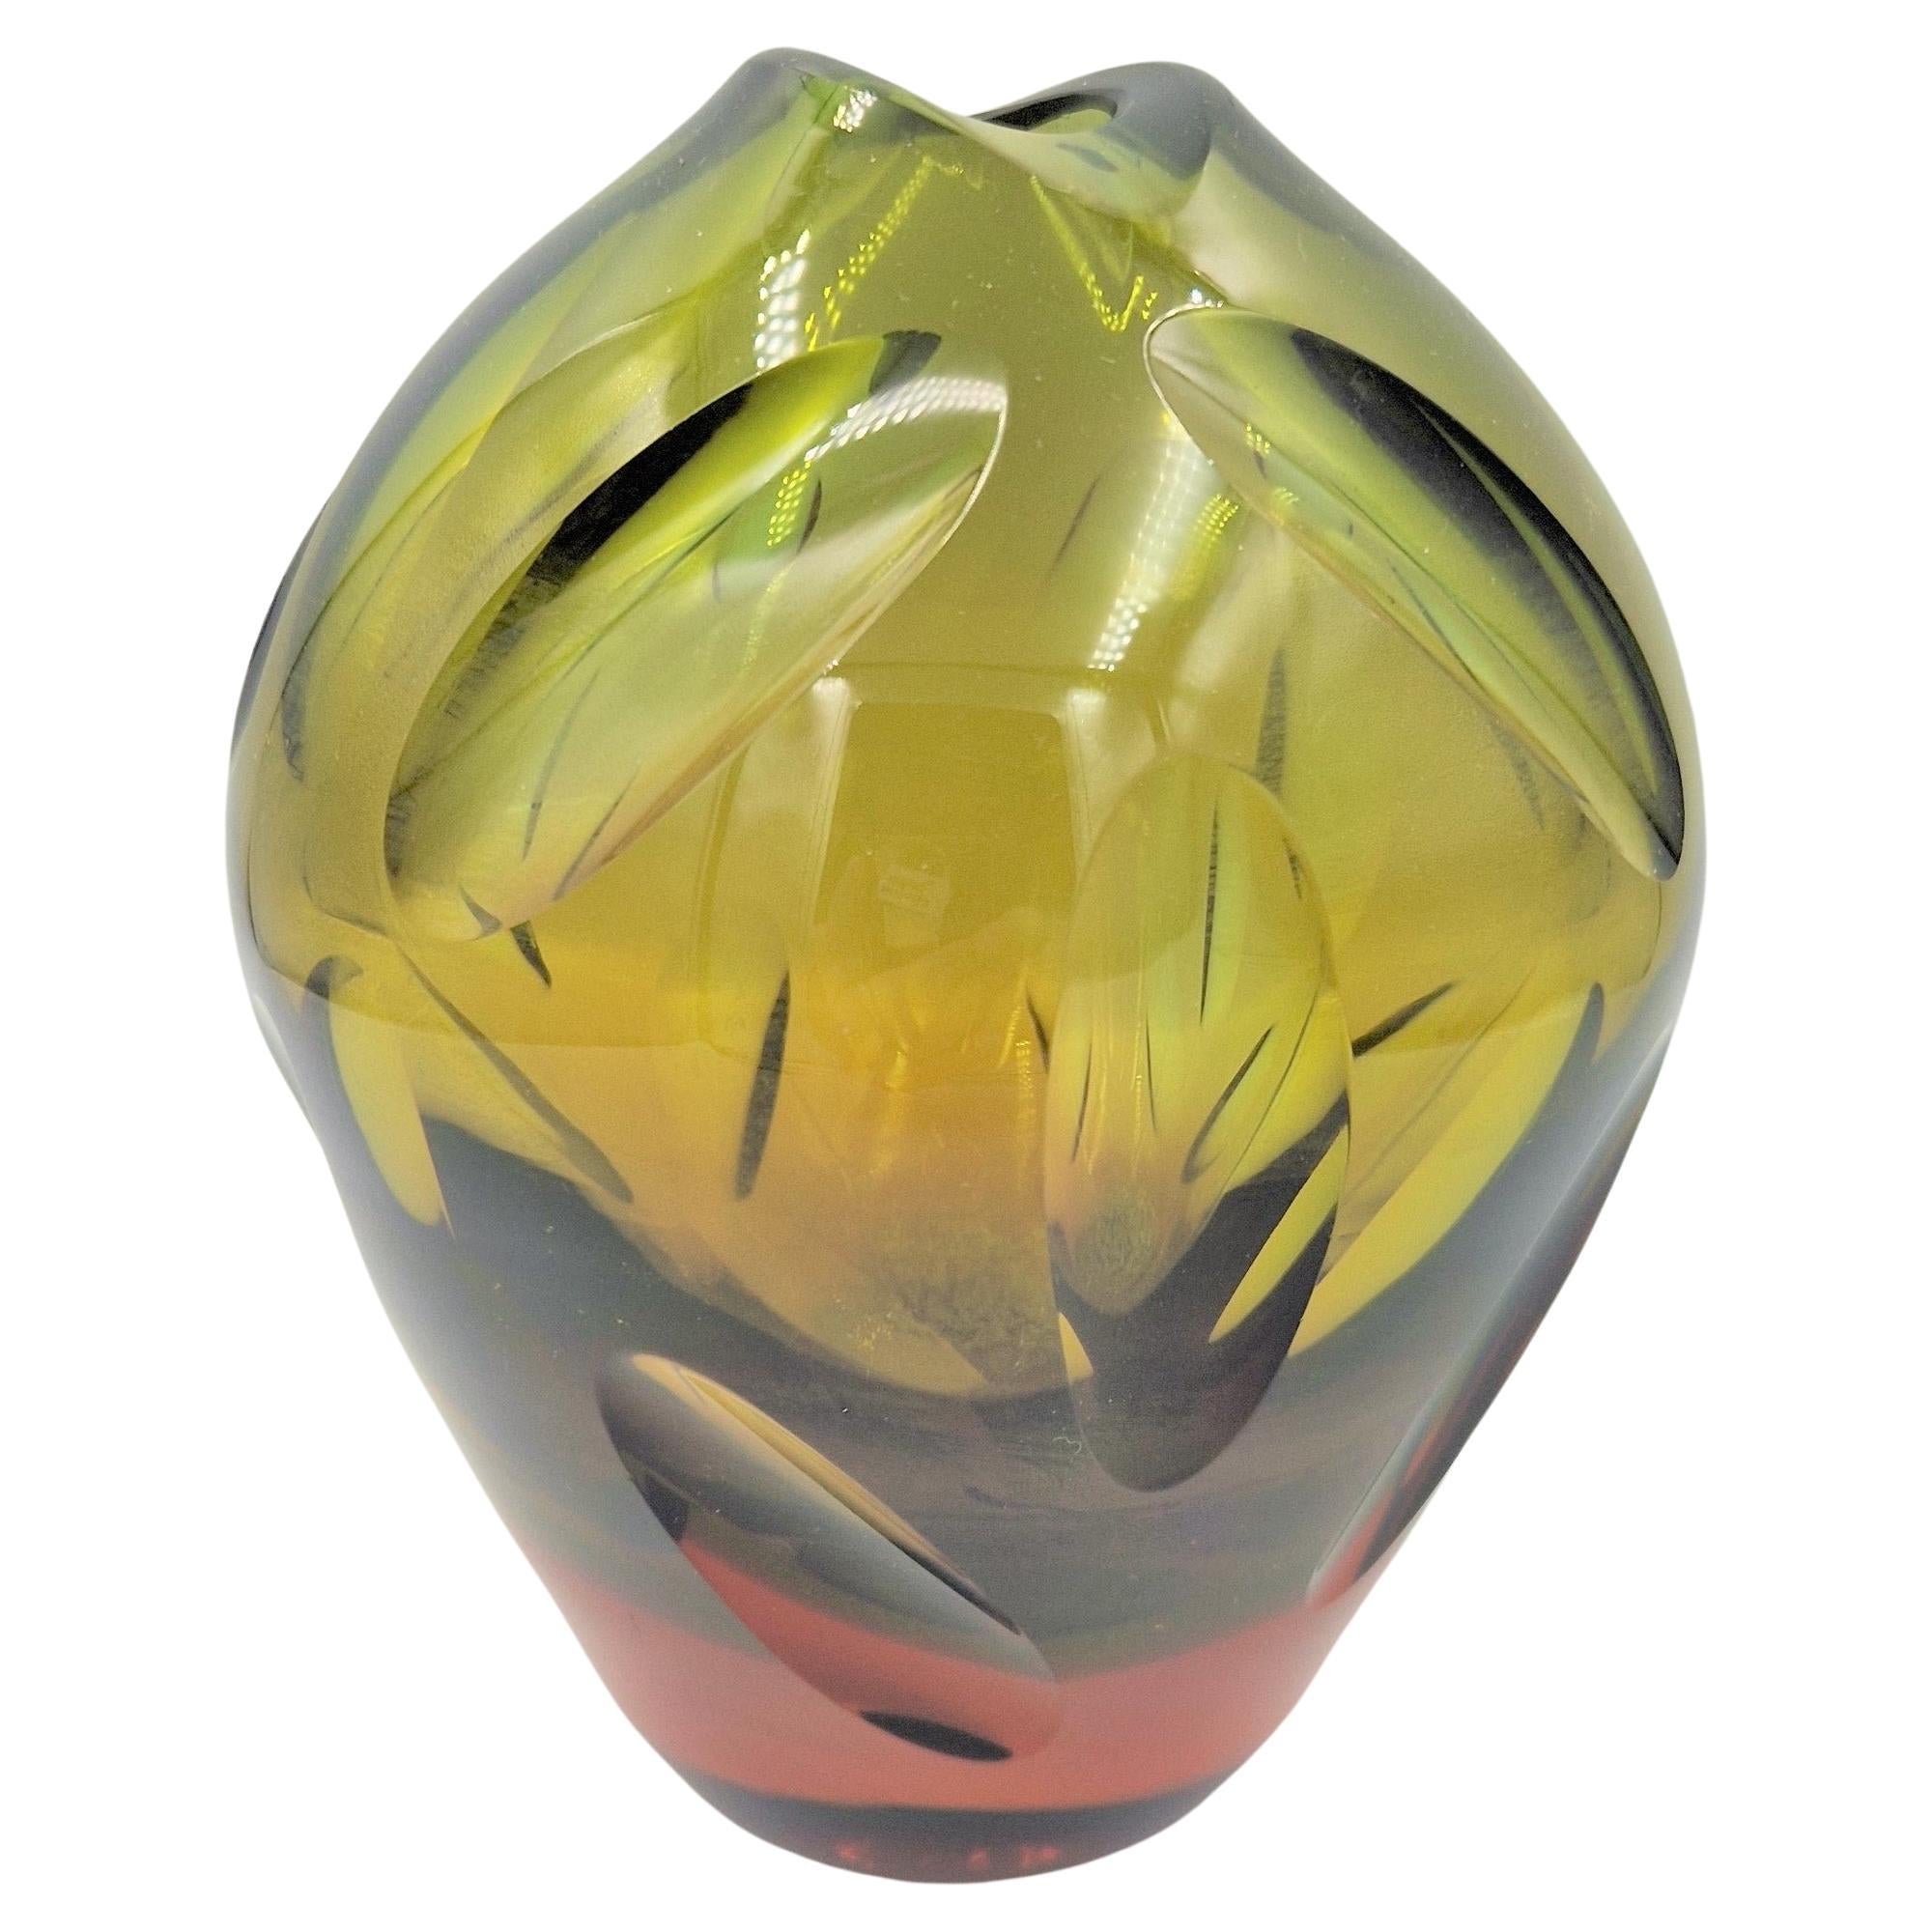 MId century glass vase by Erich Jachmann for WMF. 1950 - 1959